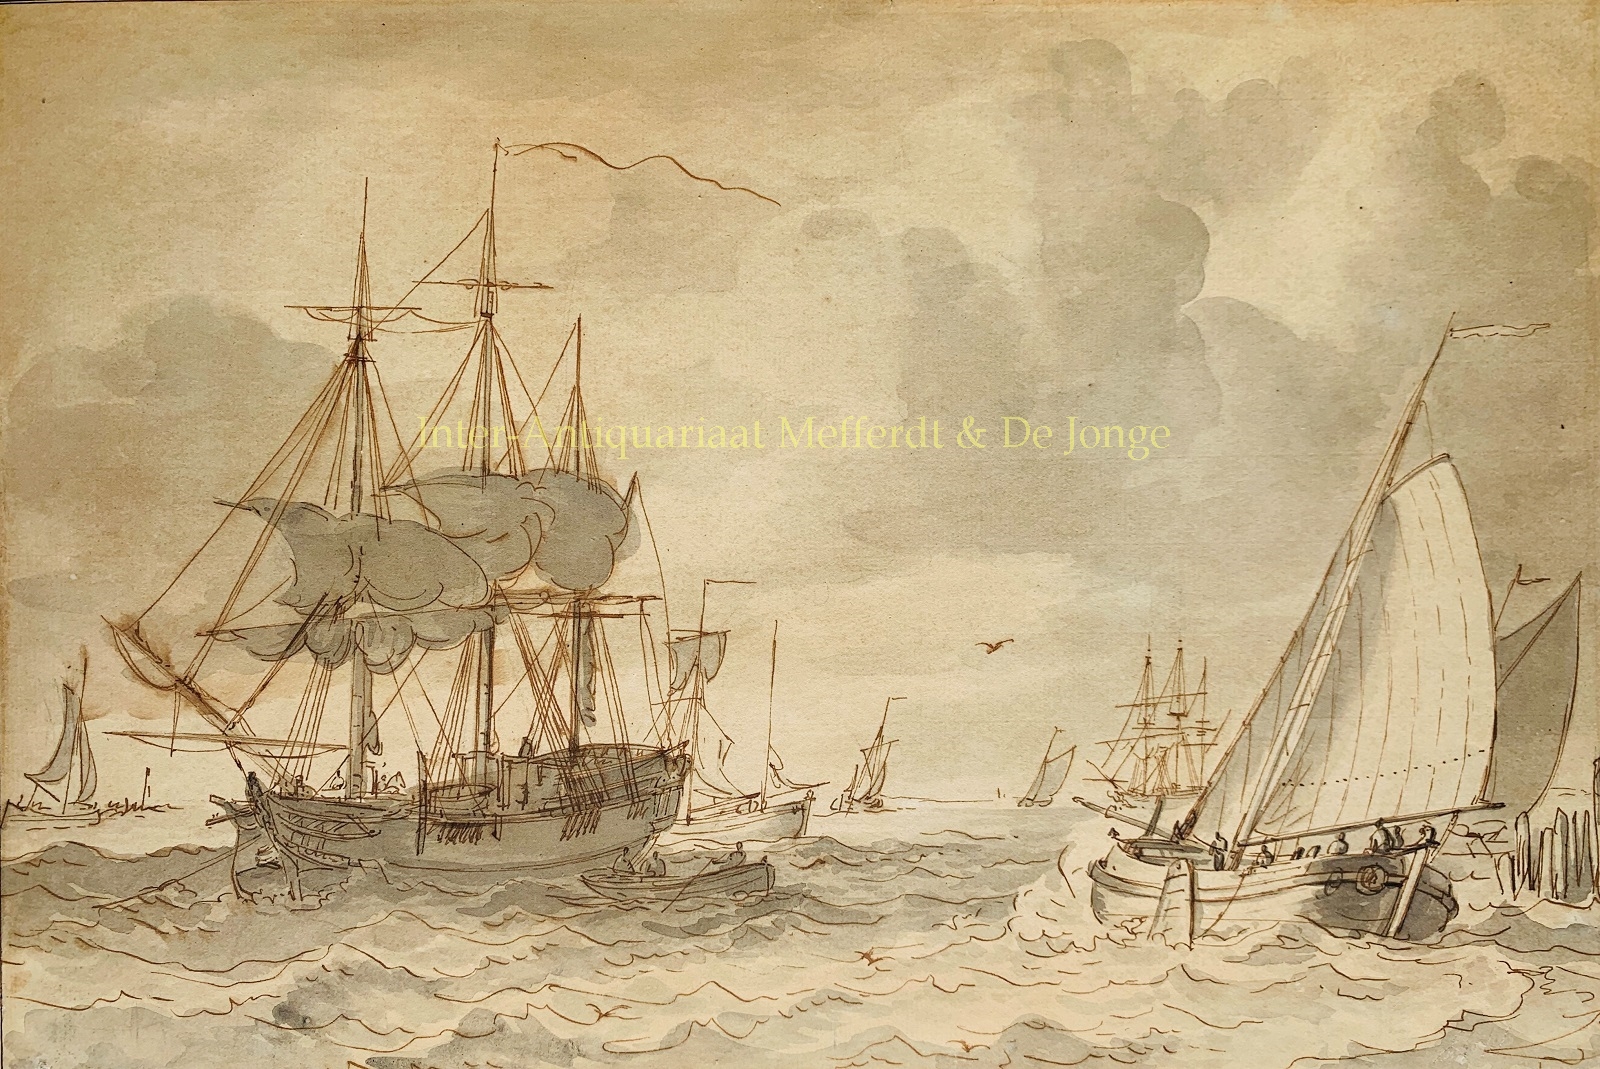 Groenewegen-- Gerrit (1754-1826) - Ships in an estuary - Gerrit Groenewegen, c. 1800